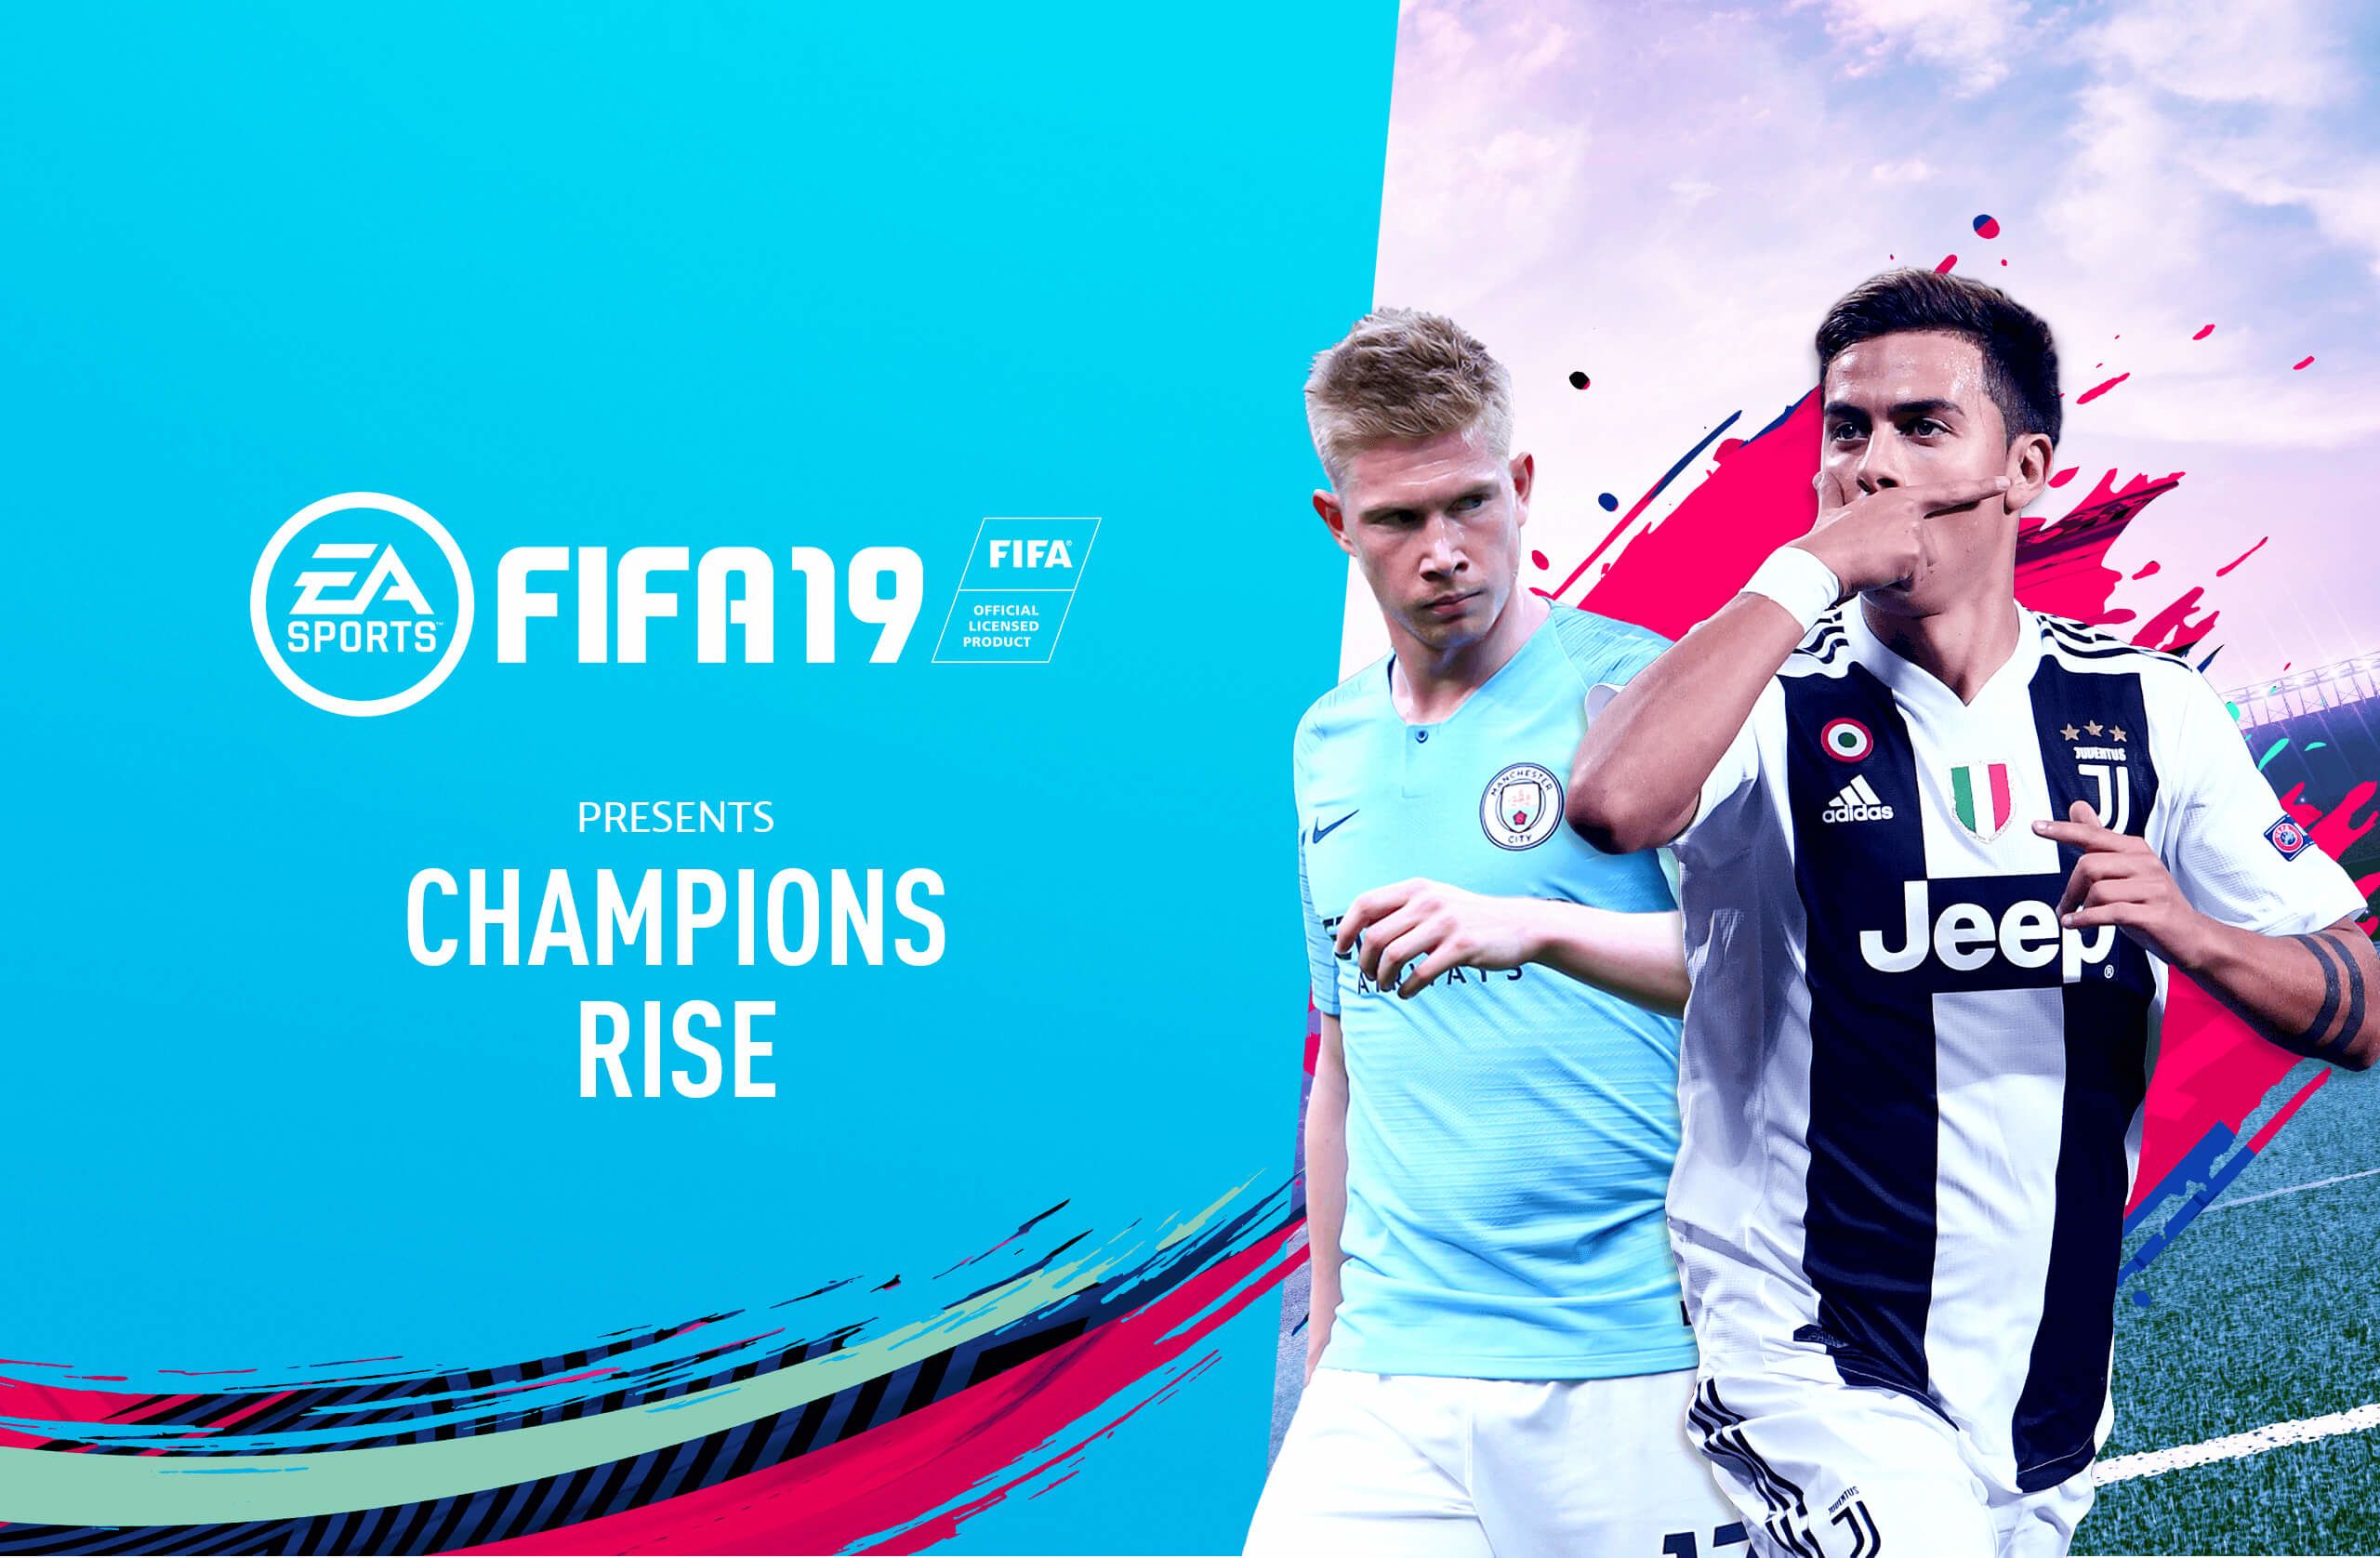 Fifa отзывы. FIFA 19. FIFA 19 presents Champions Rise. Камавинга ФИФА 19. ФИФА 19 сюжет.